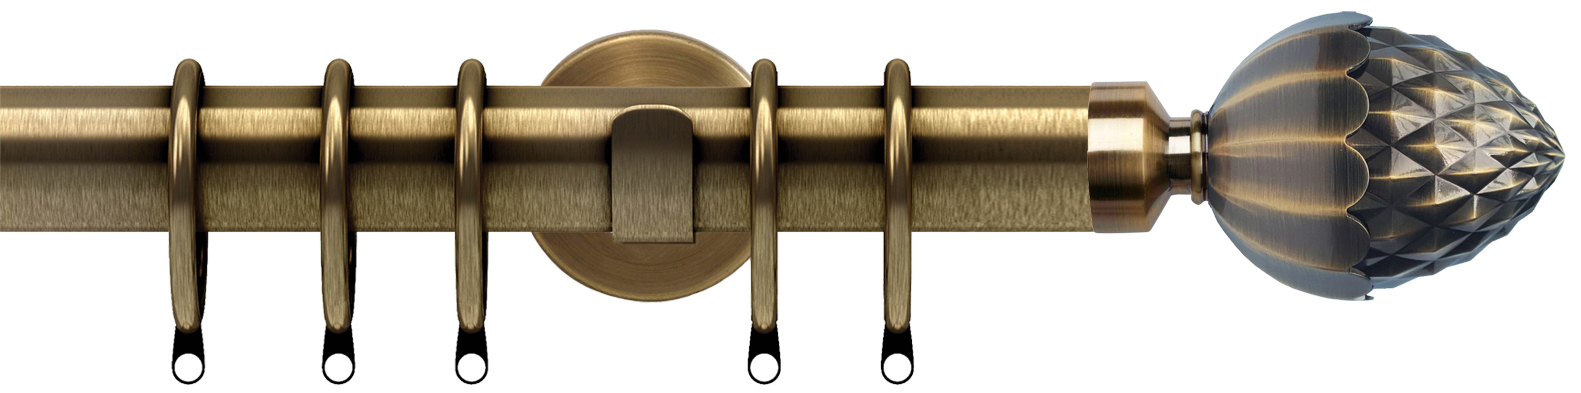 Speedy 35mm Poles Apart IDC Metal Pole Antique Brass, Acorn